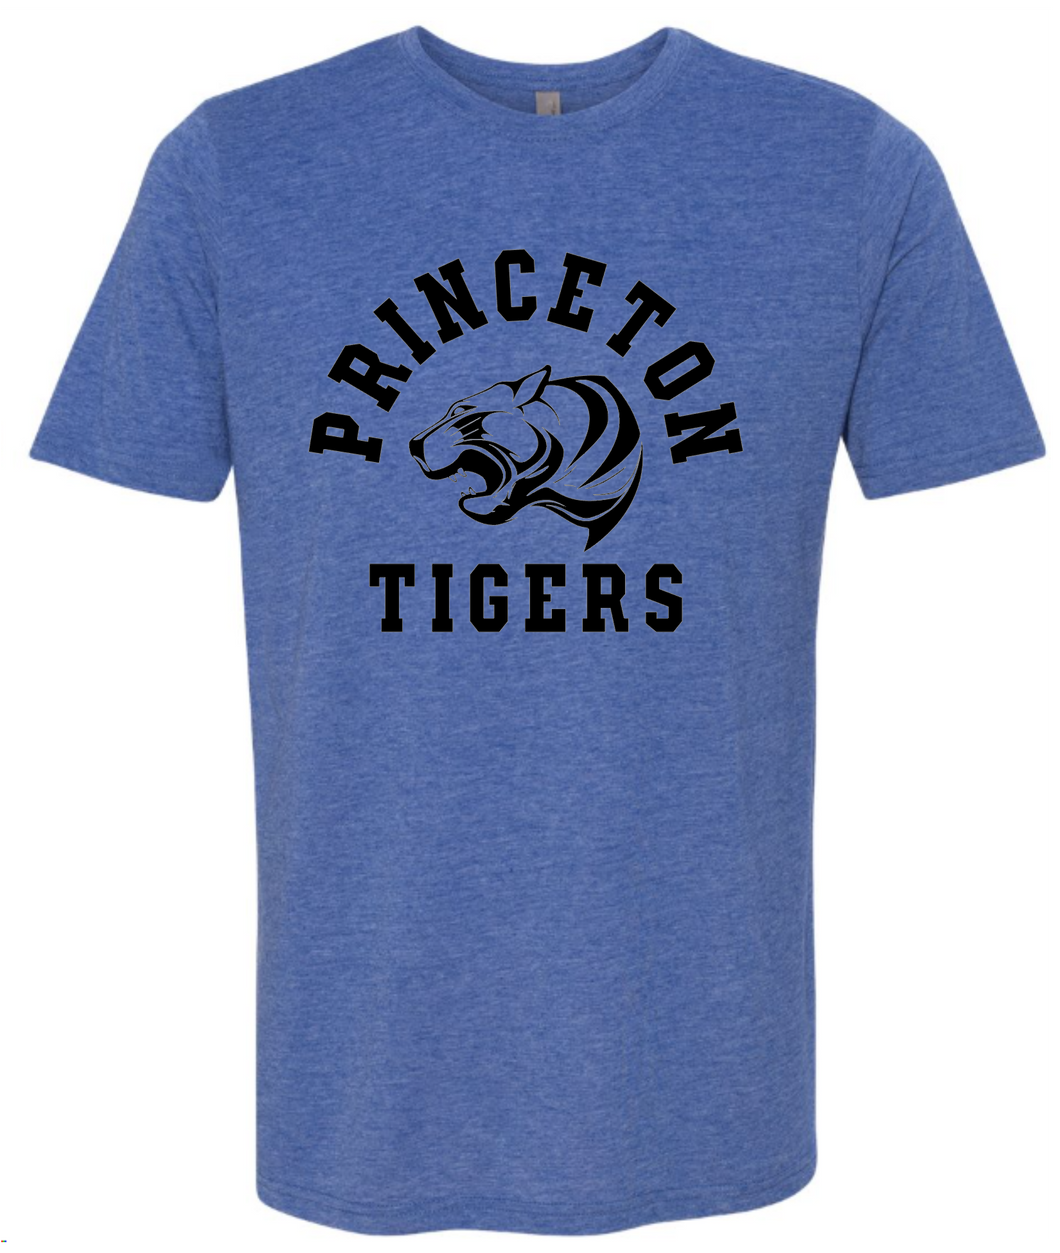 Princeton tigers vintage tee